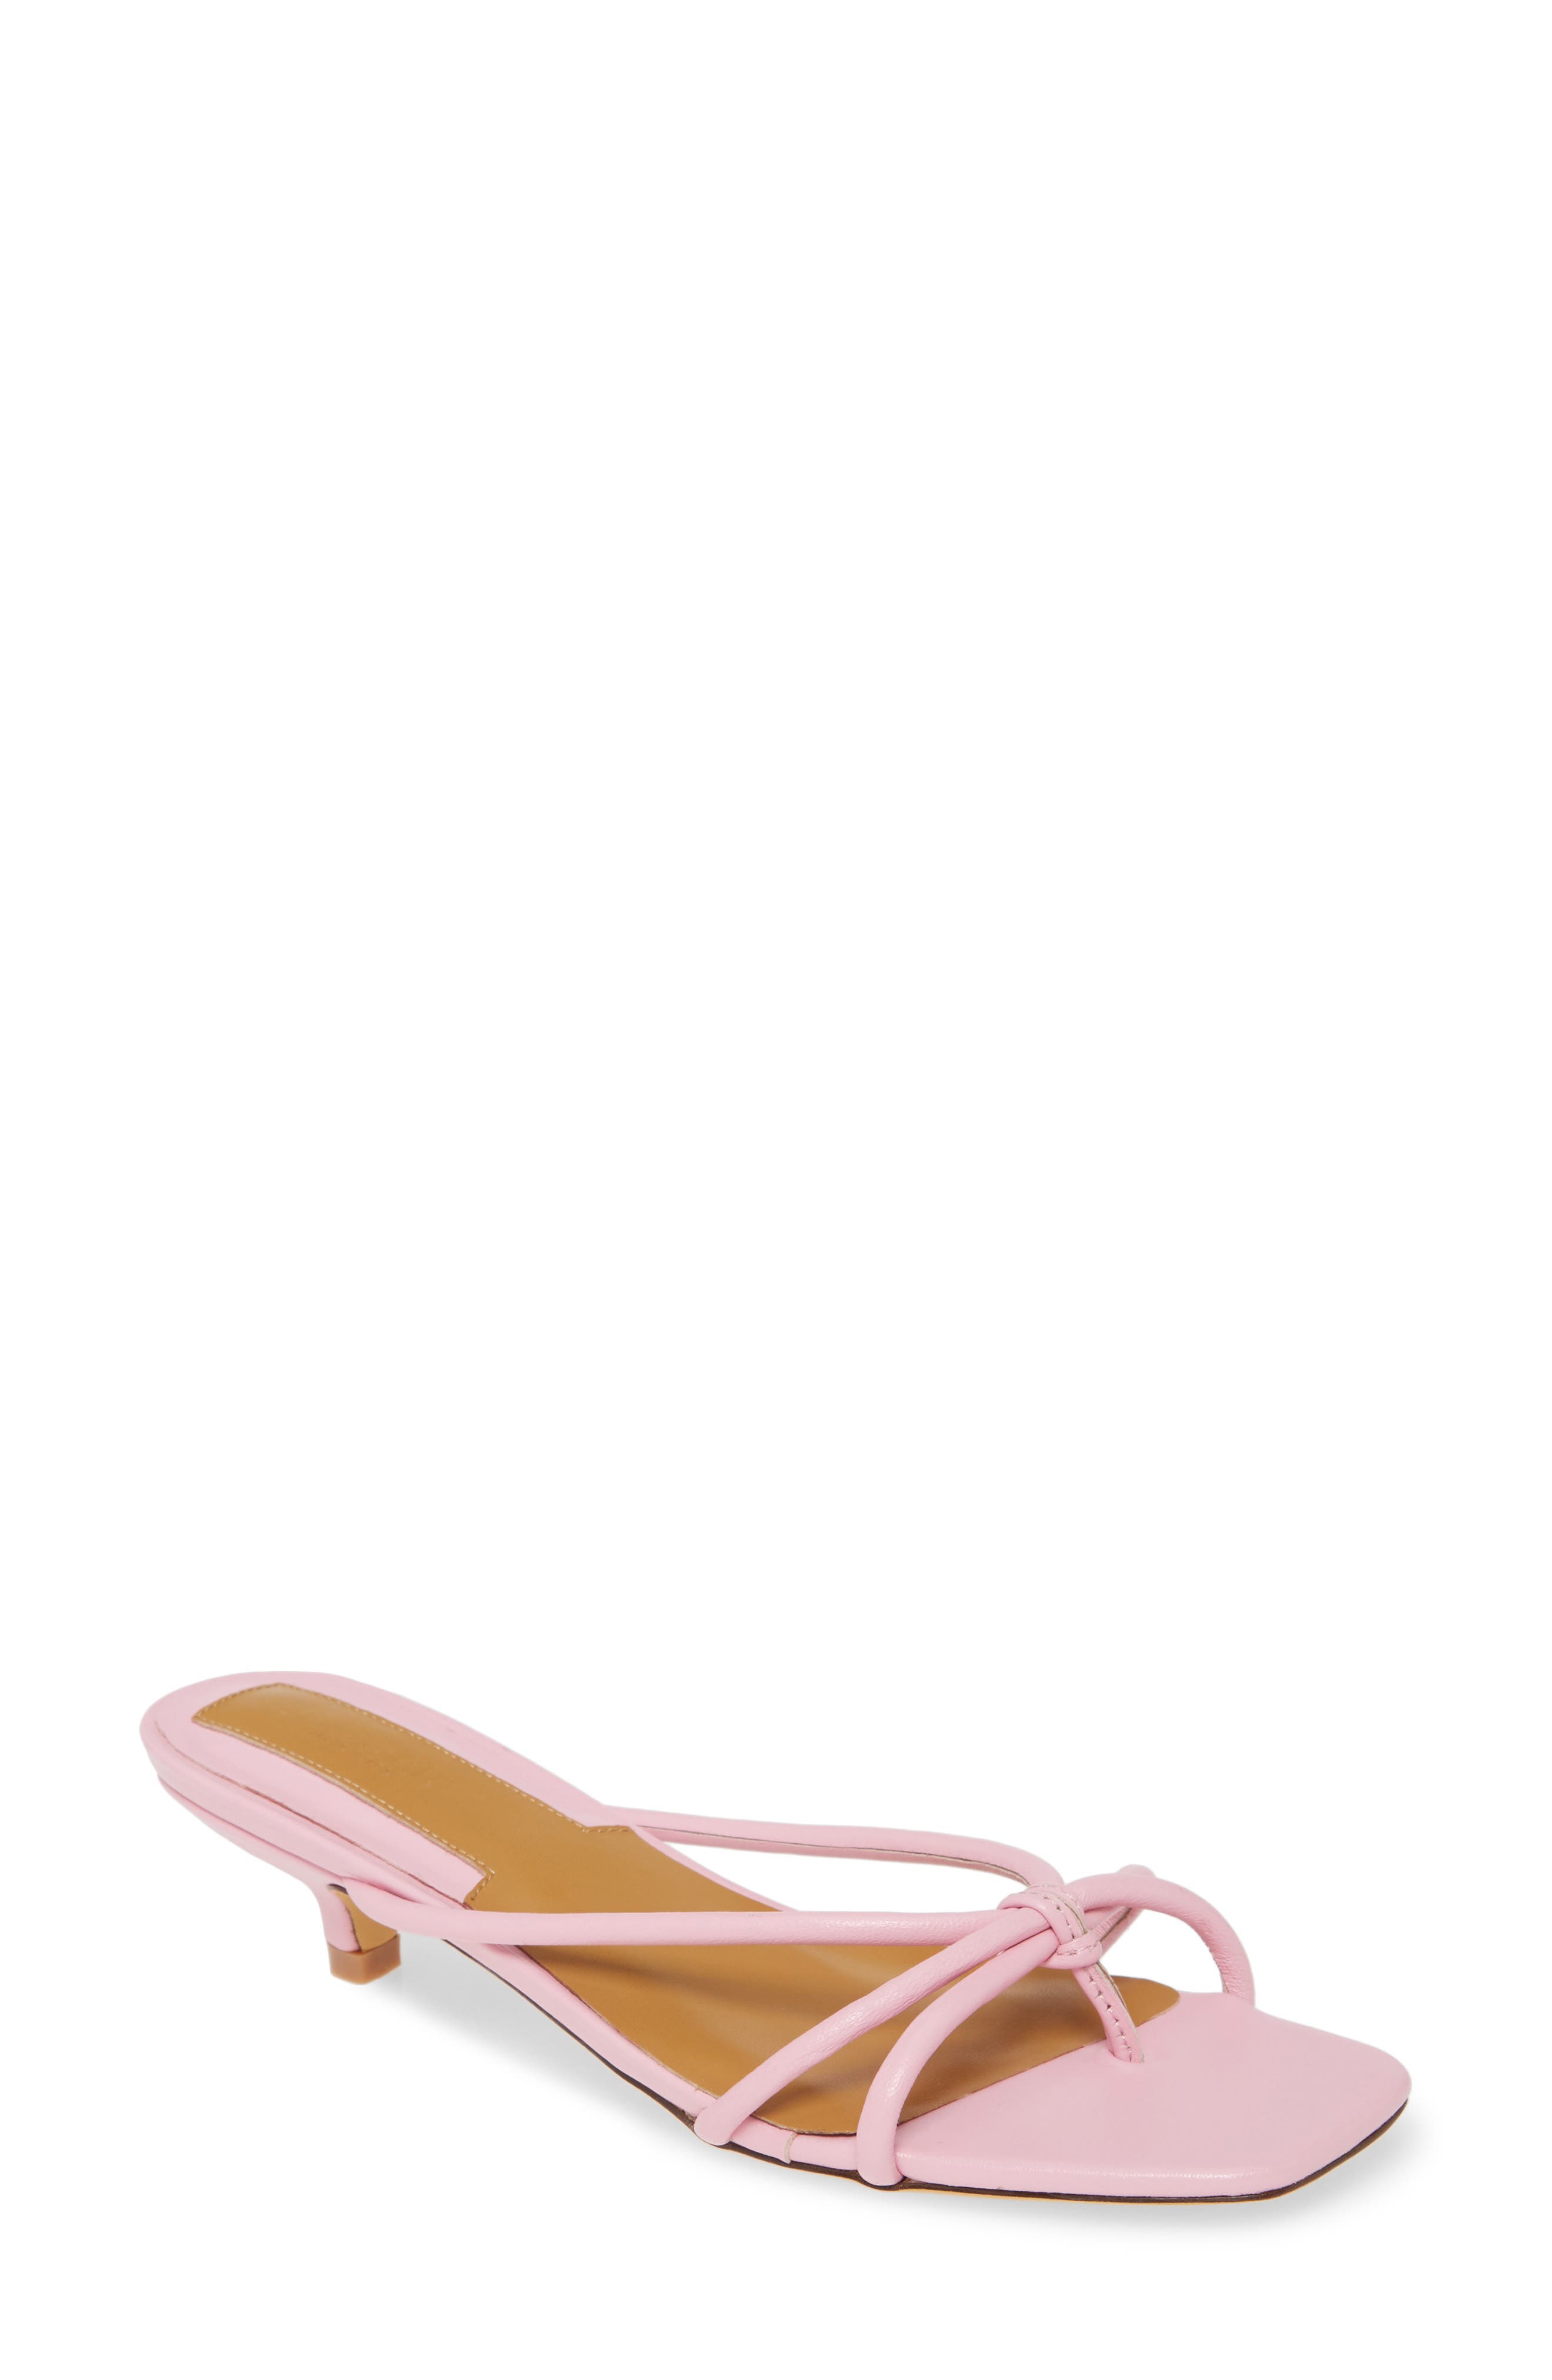 pink strappy kitten heels